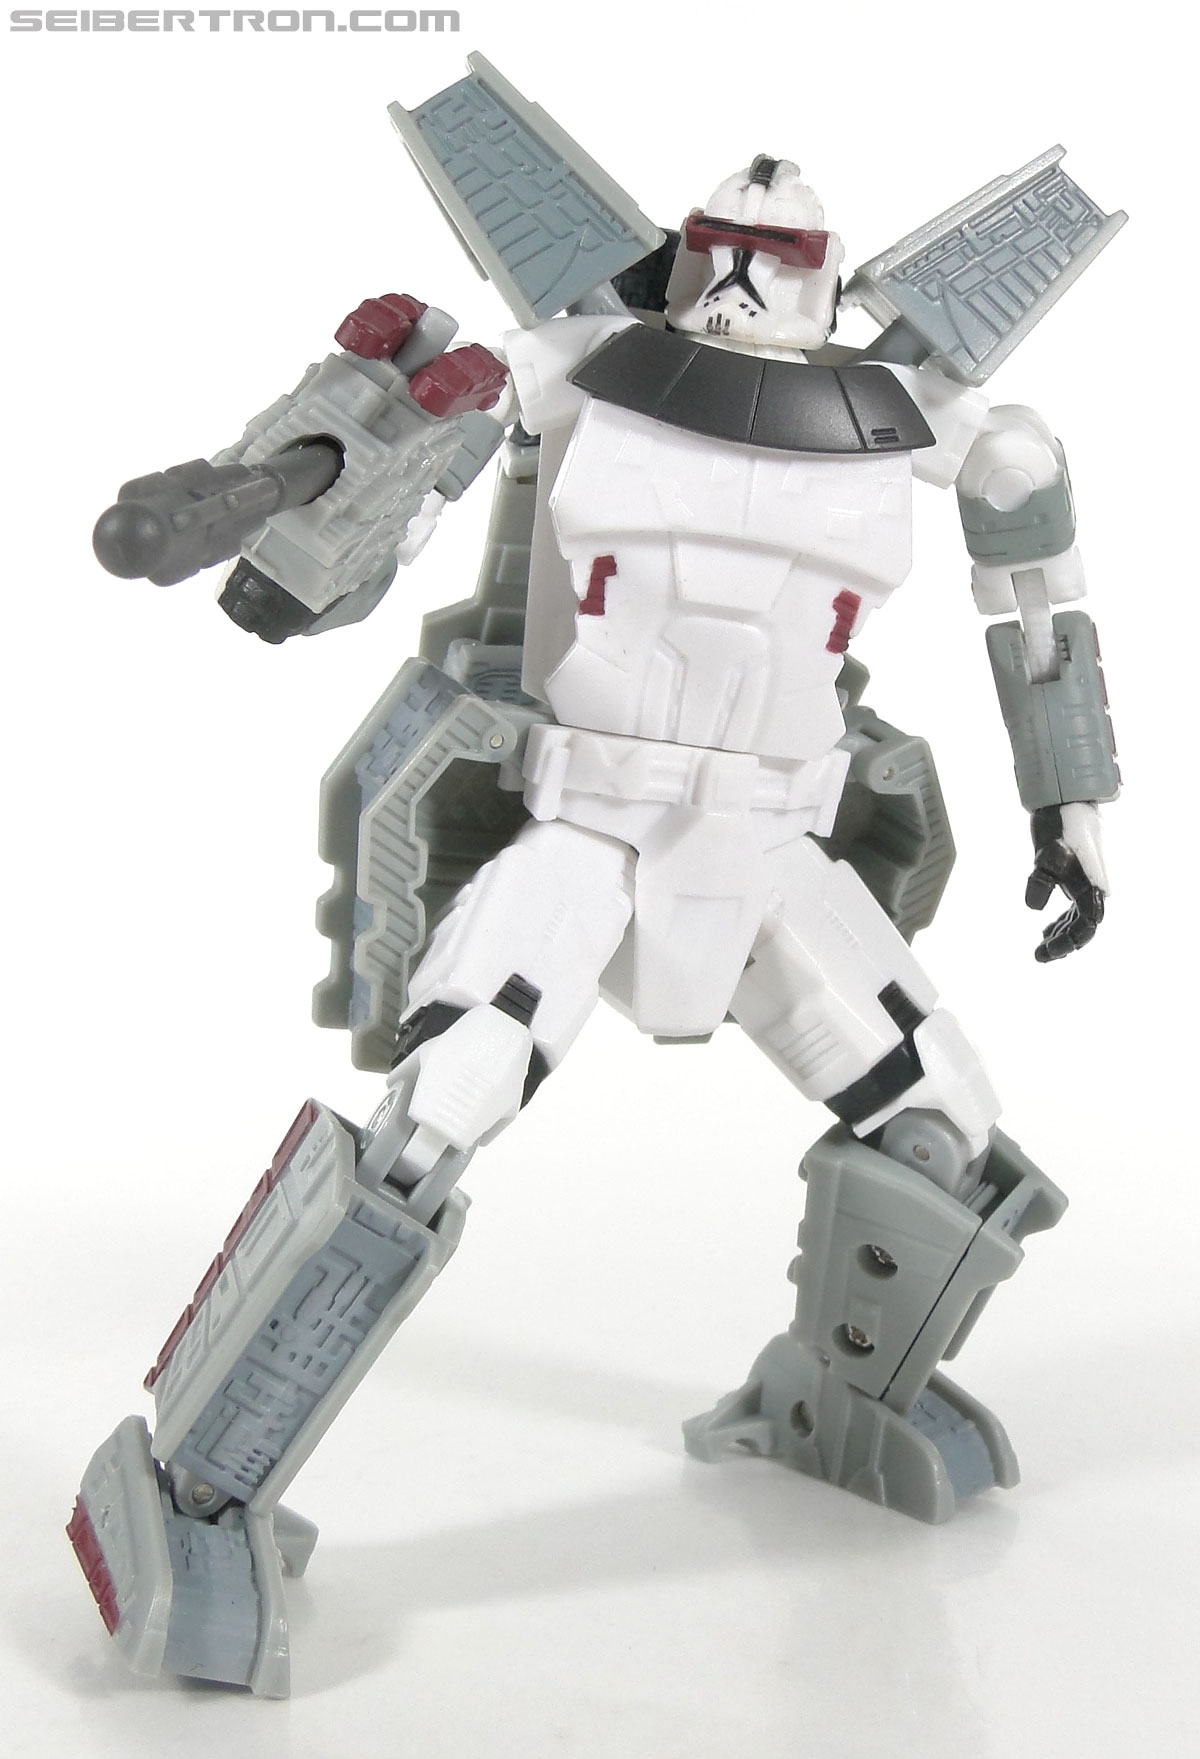 Star Wars Transformers Lieutenant Thire (Republic Attack Cruiser) (Image #66 of 76)